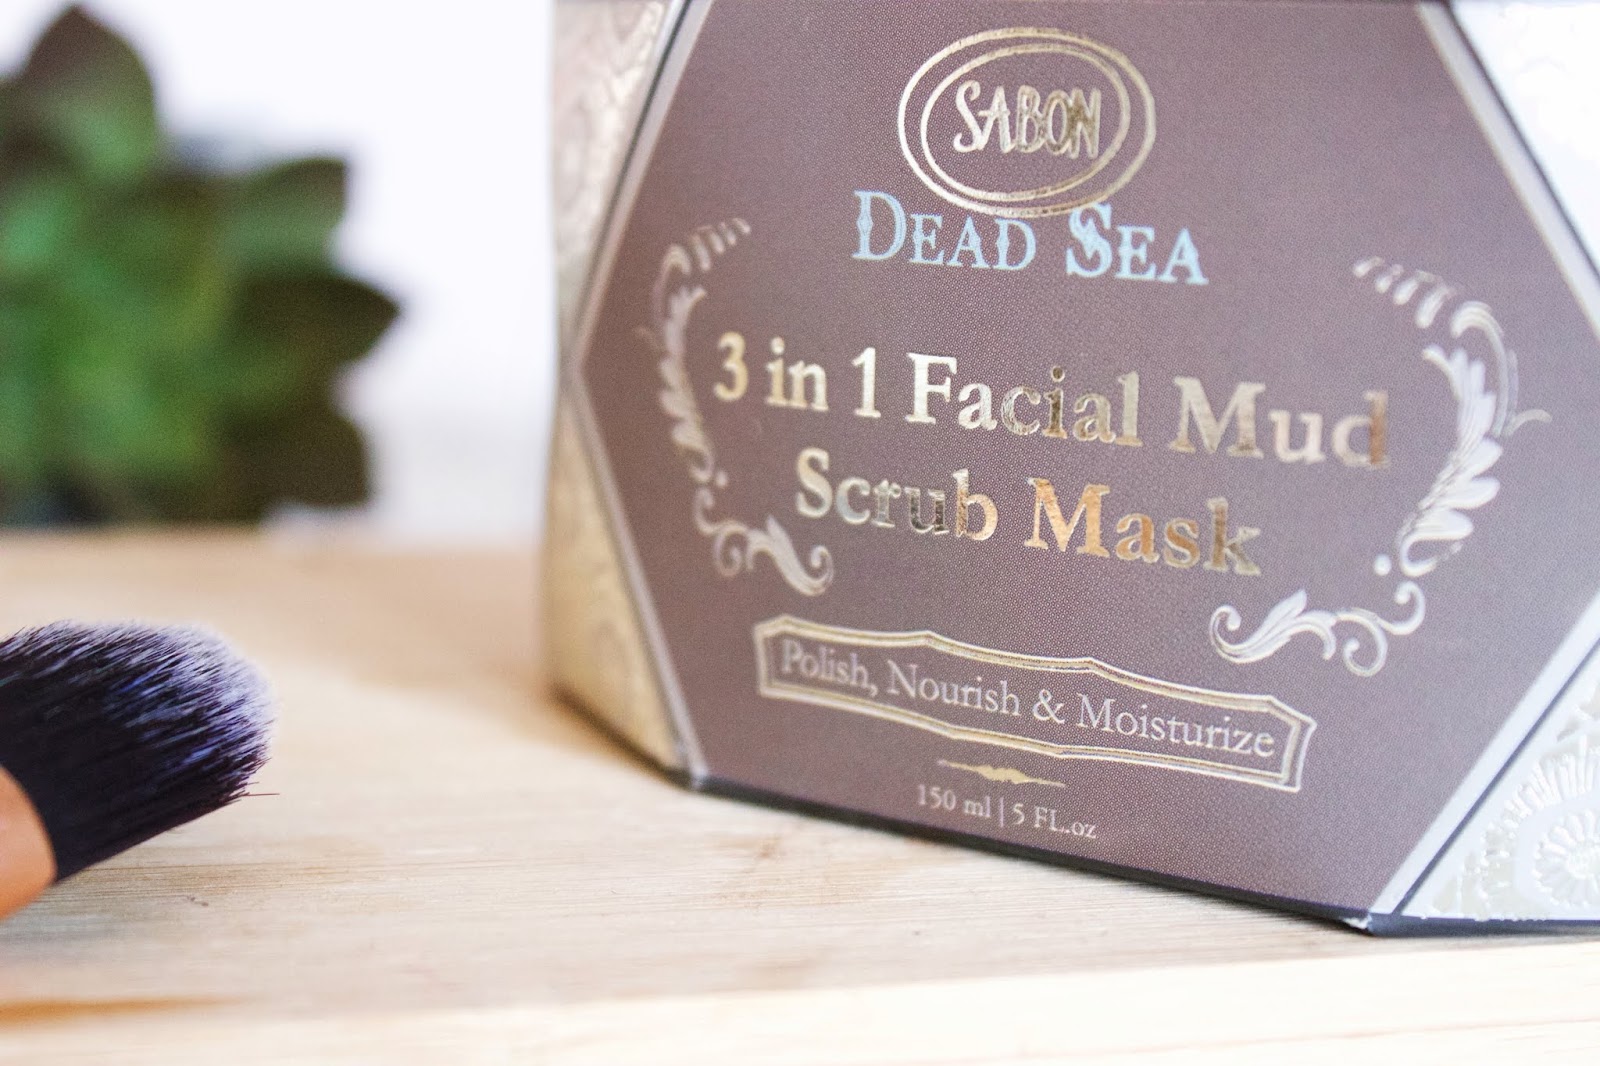 sabon-3-in-1-facial-mud-scrub-mask-review